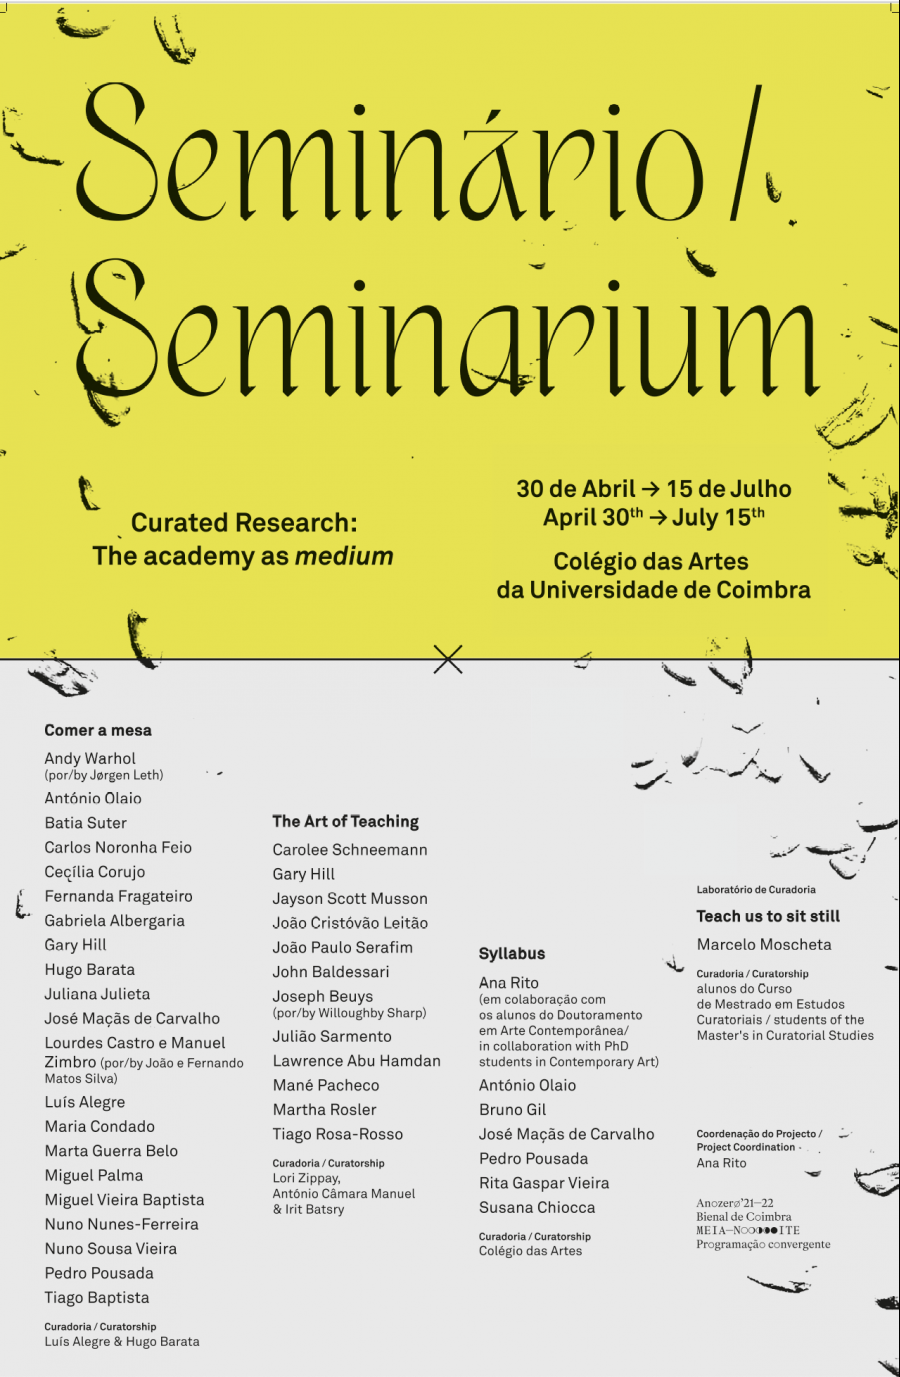 Seminário/Seminarium Curated research The Academy as medium